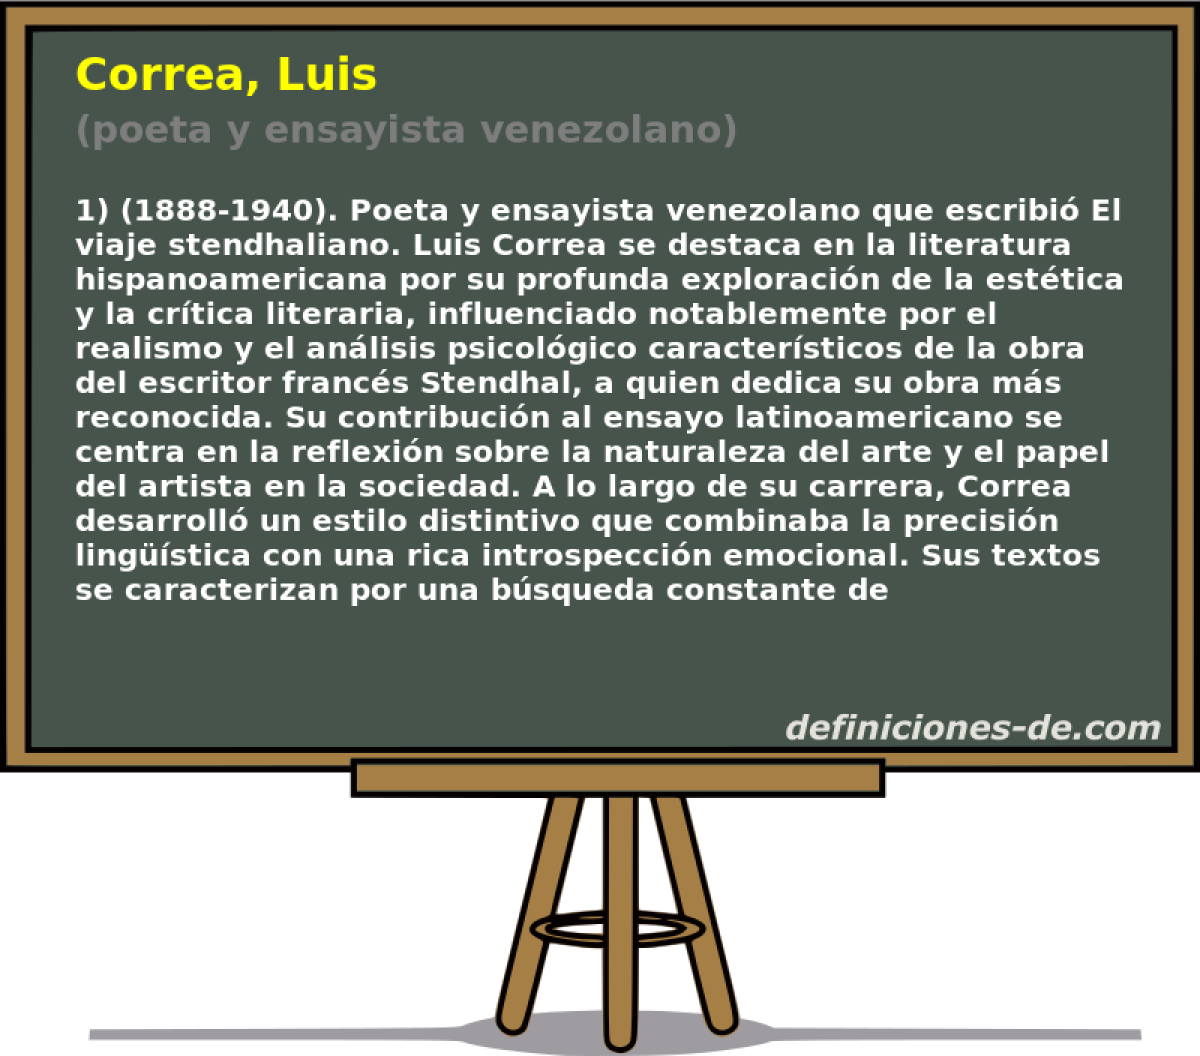 Correa, Luis (poeta y ensayista venezolano)